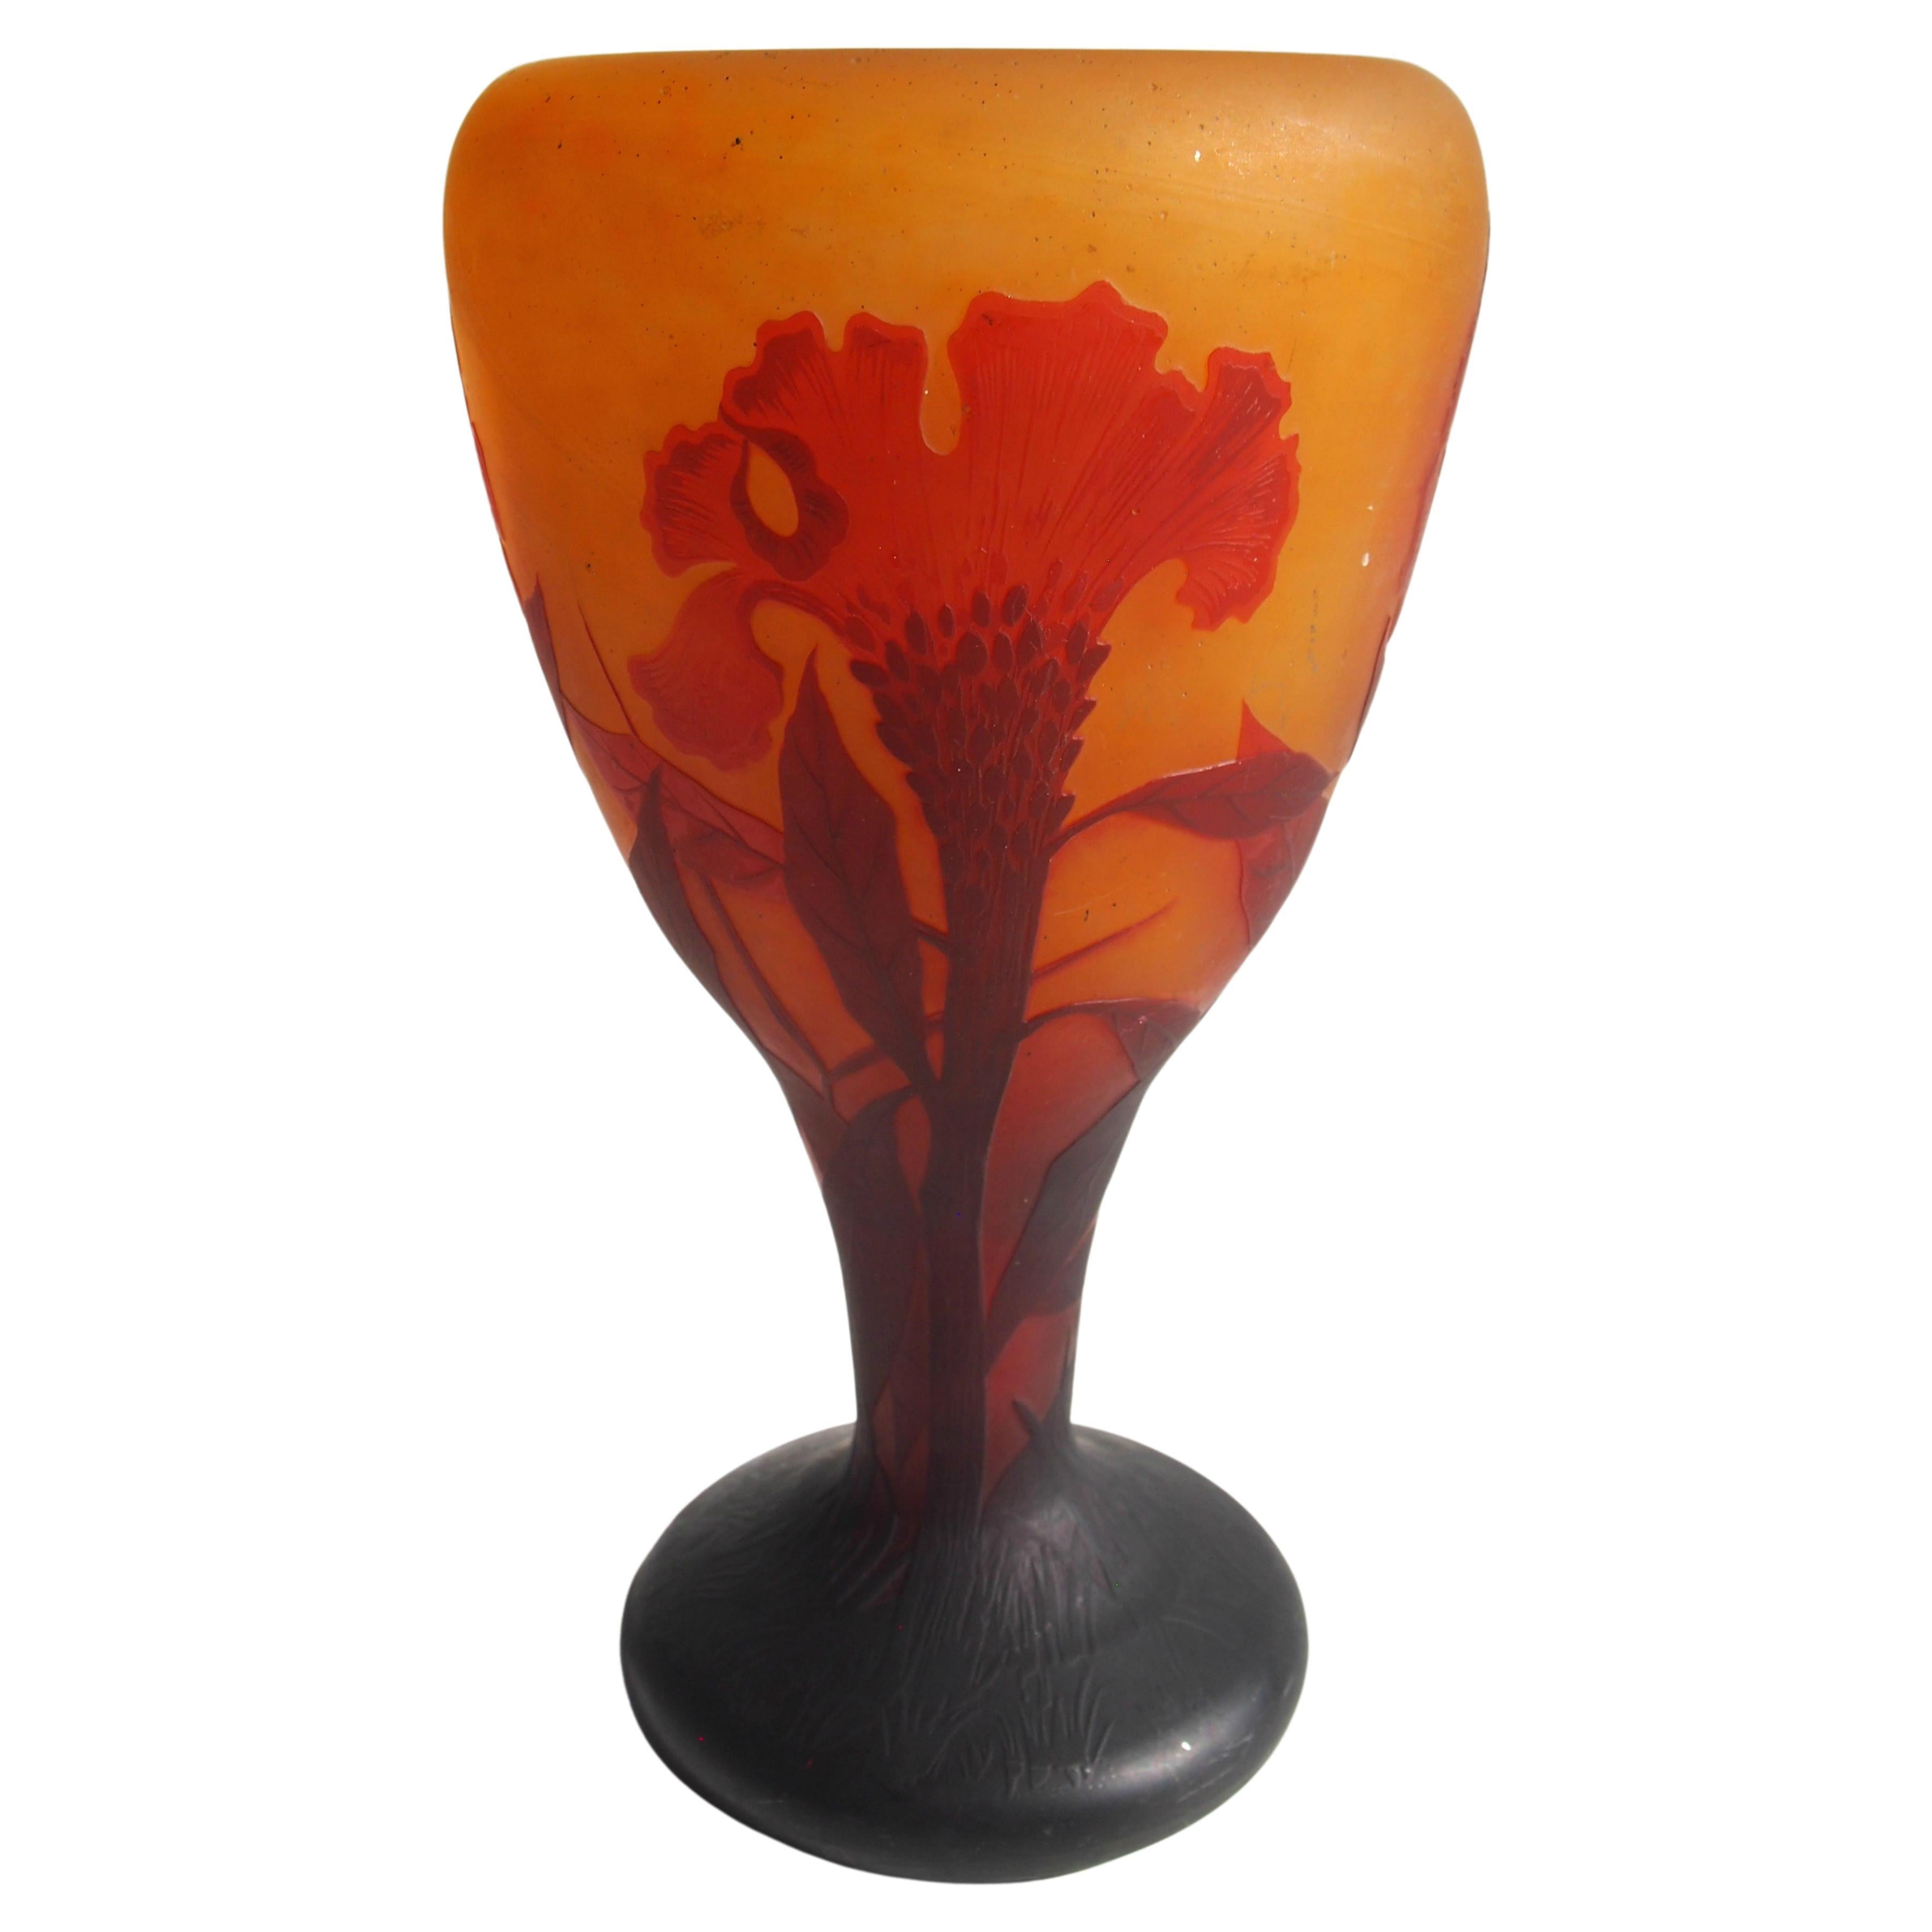 French Art Nouveau Daum Cameo Glass Cockscomb Vase 1900